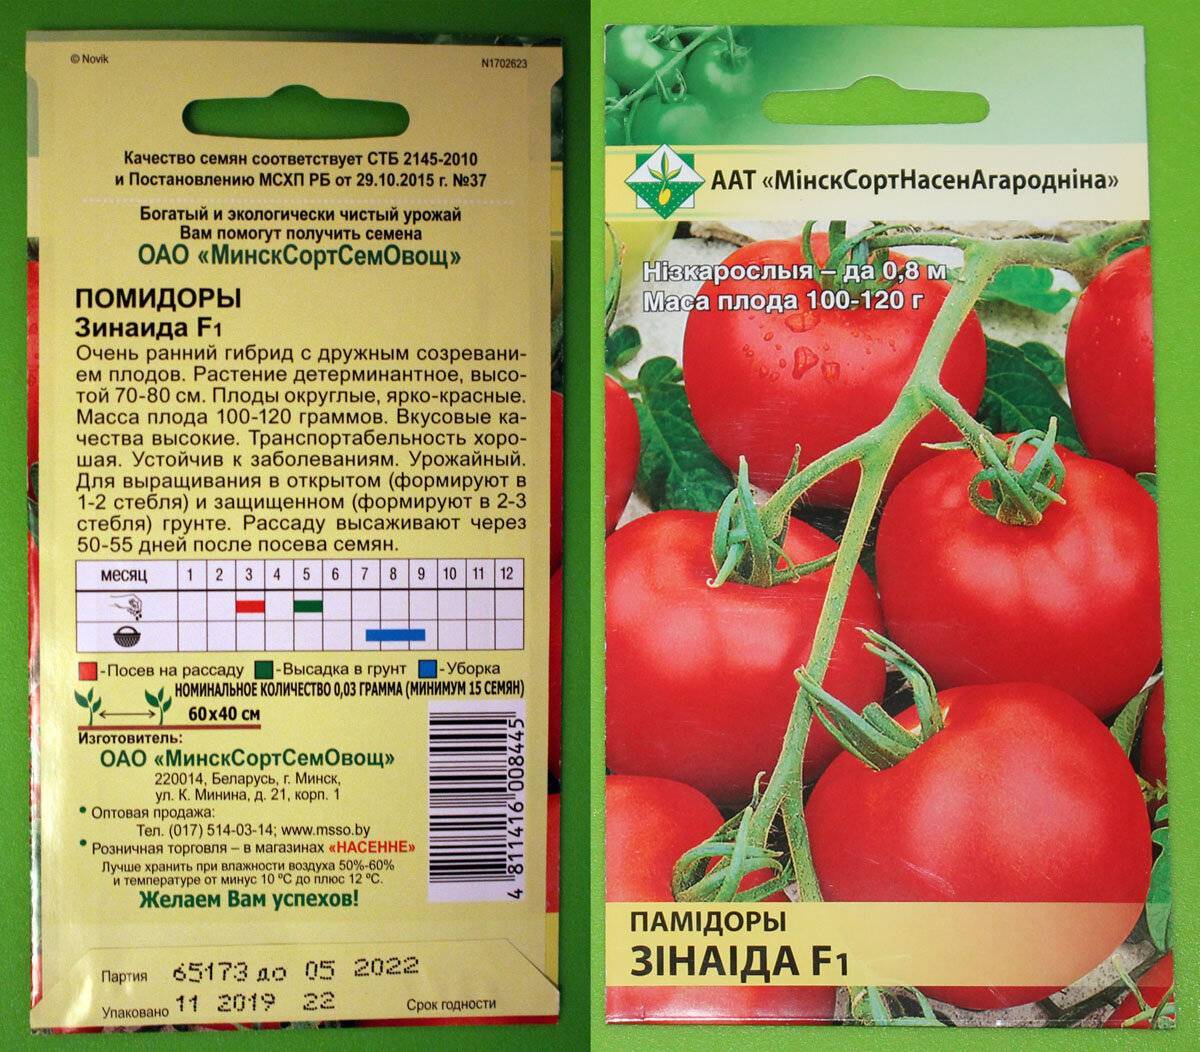 Описание сорта томата василий, его характеристика и выращивание. характеристика томата сват f1 и описание выращивания сорта